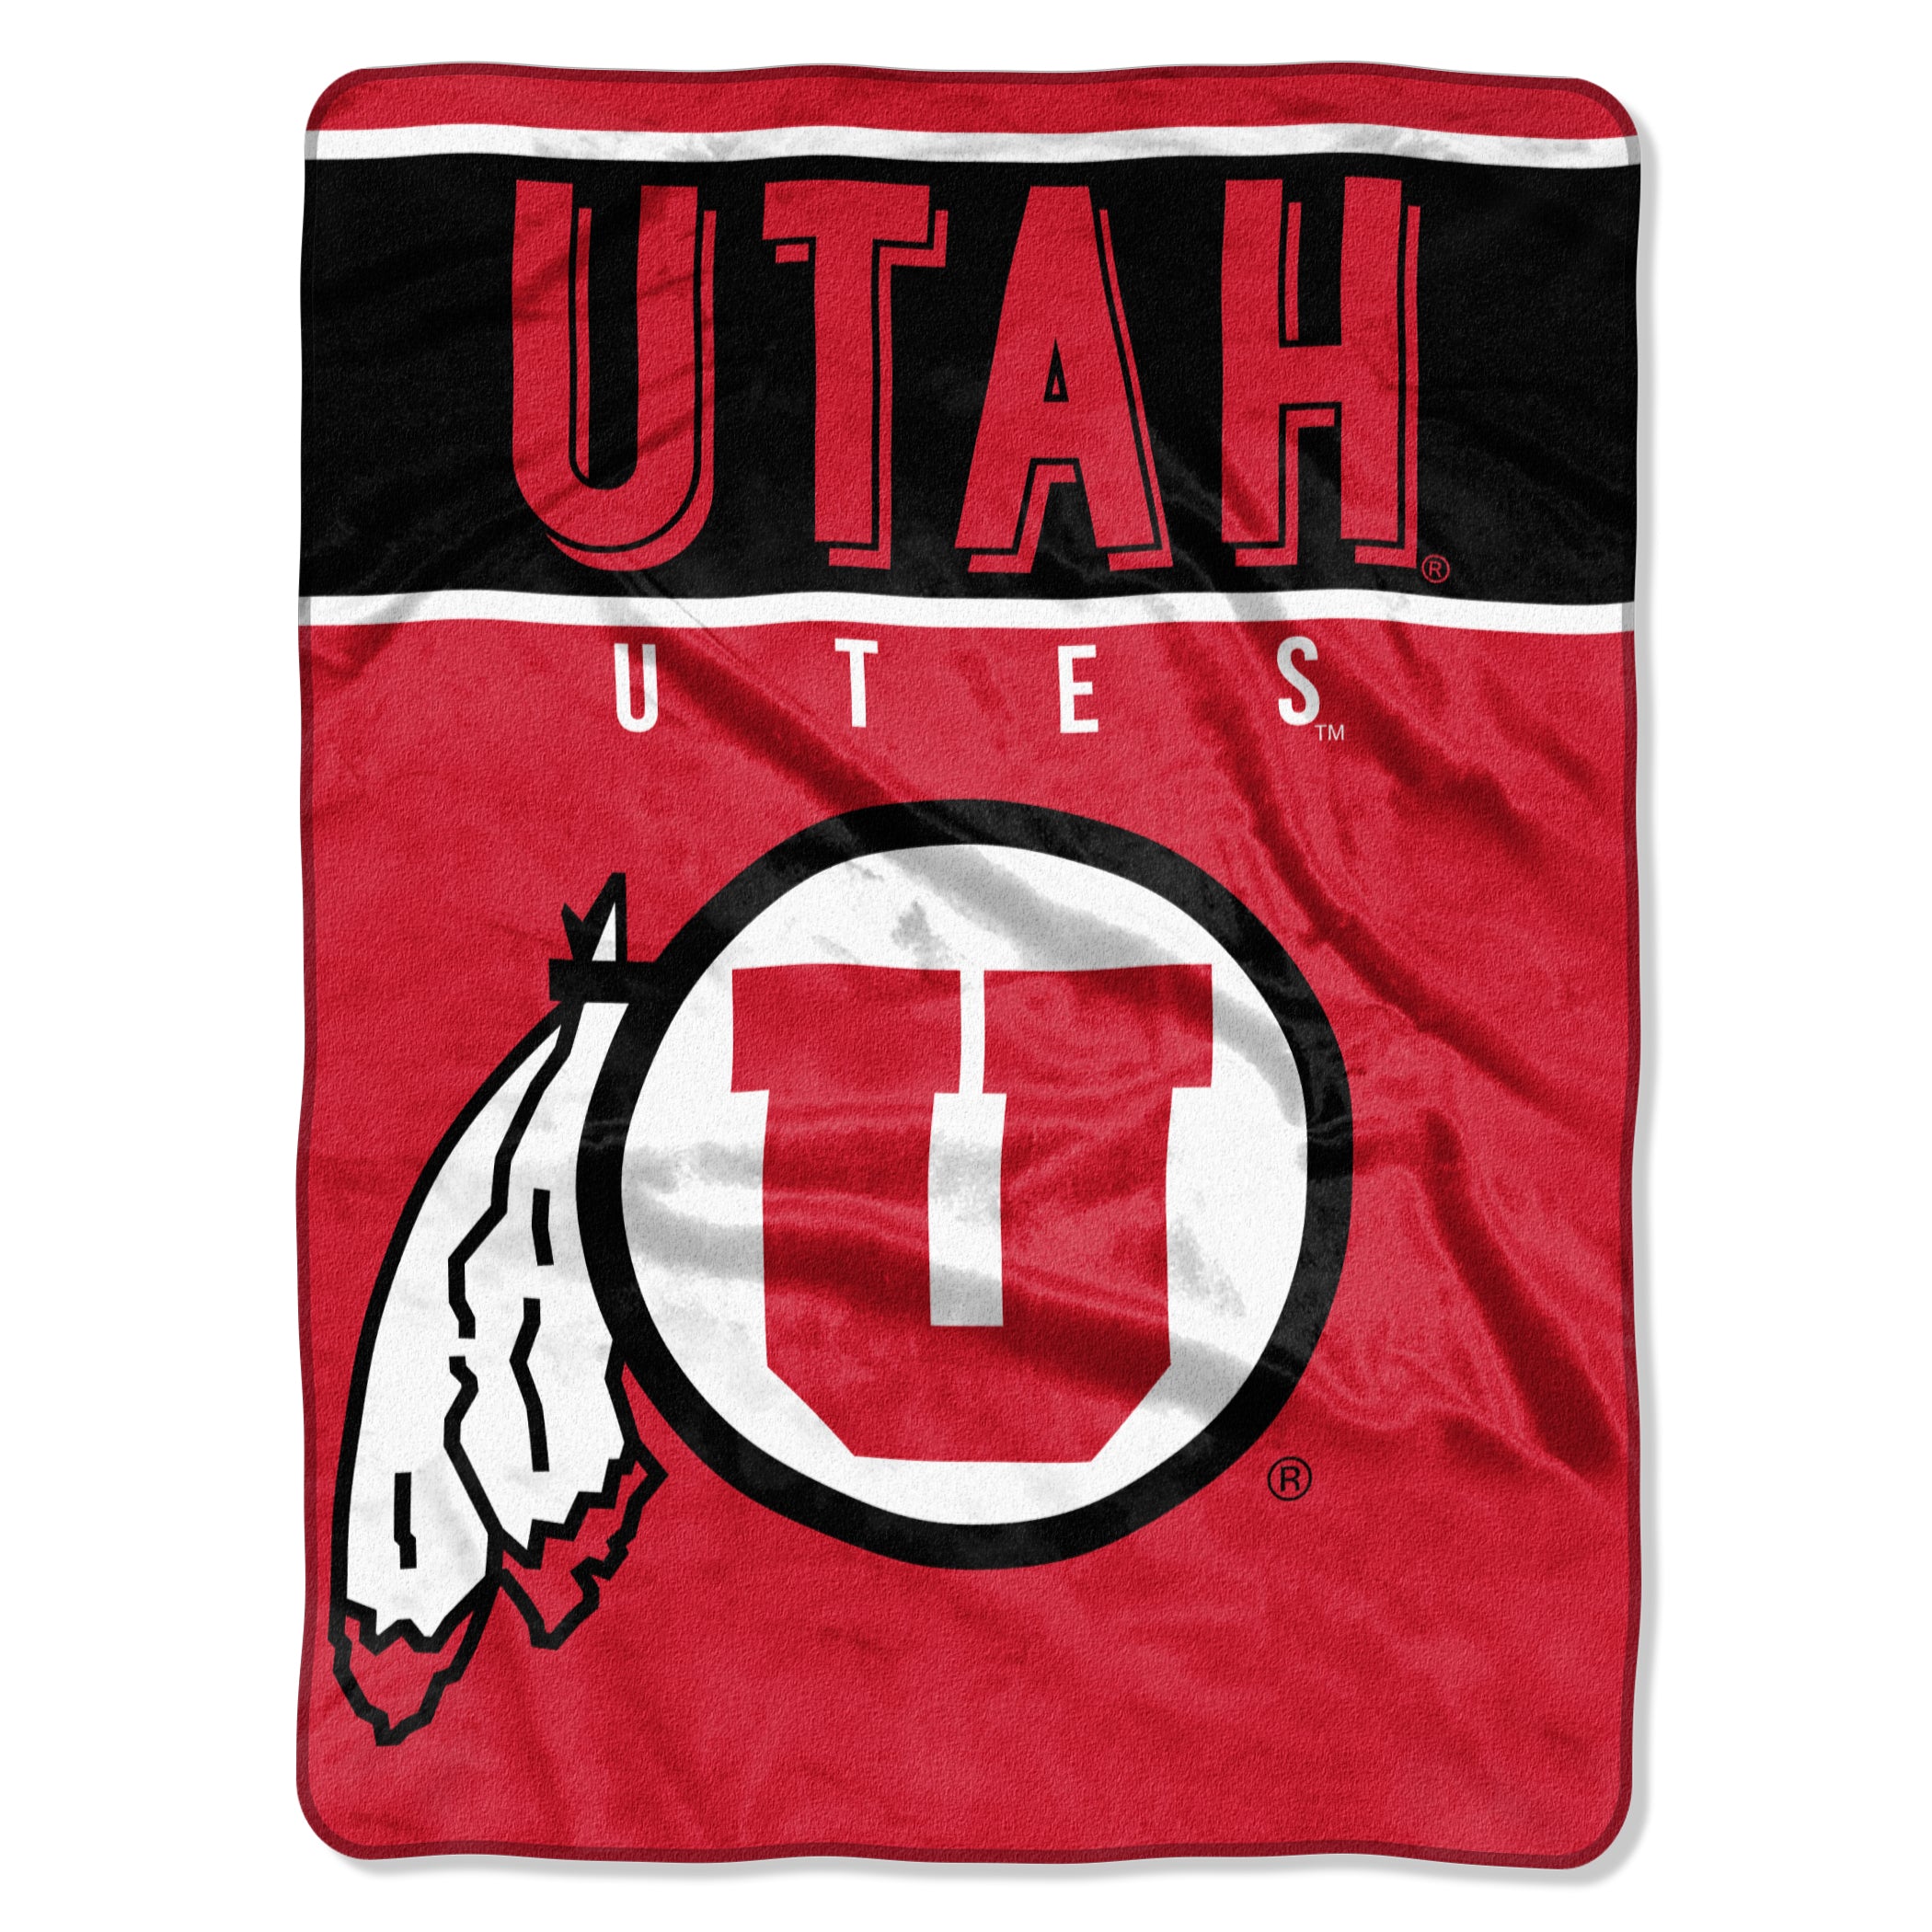 Utah Utes Blanket 60x80 Raschel Basic Design - Special Order